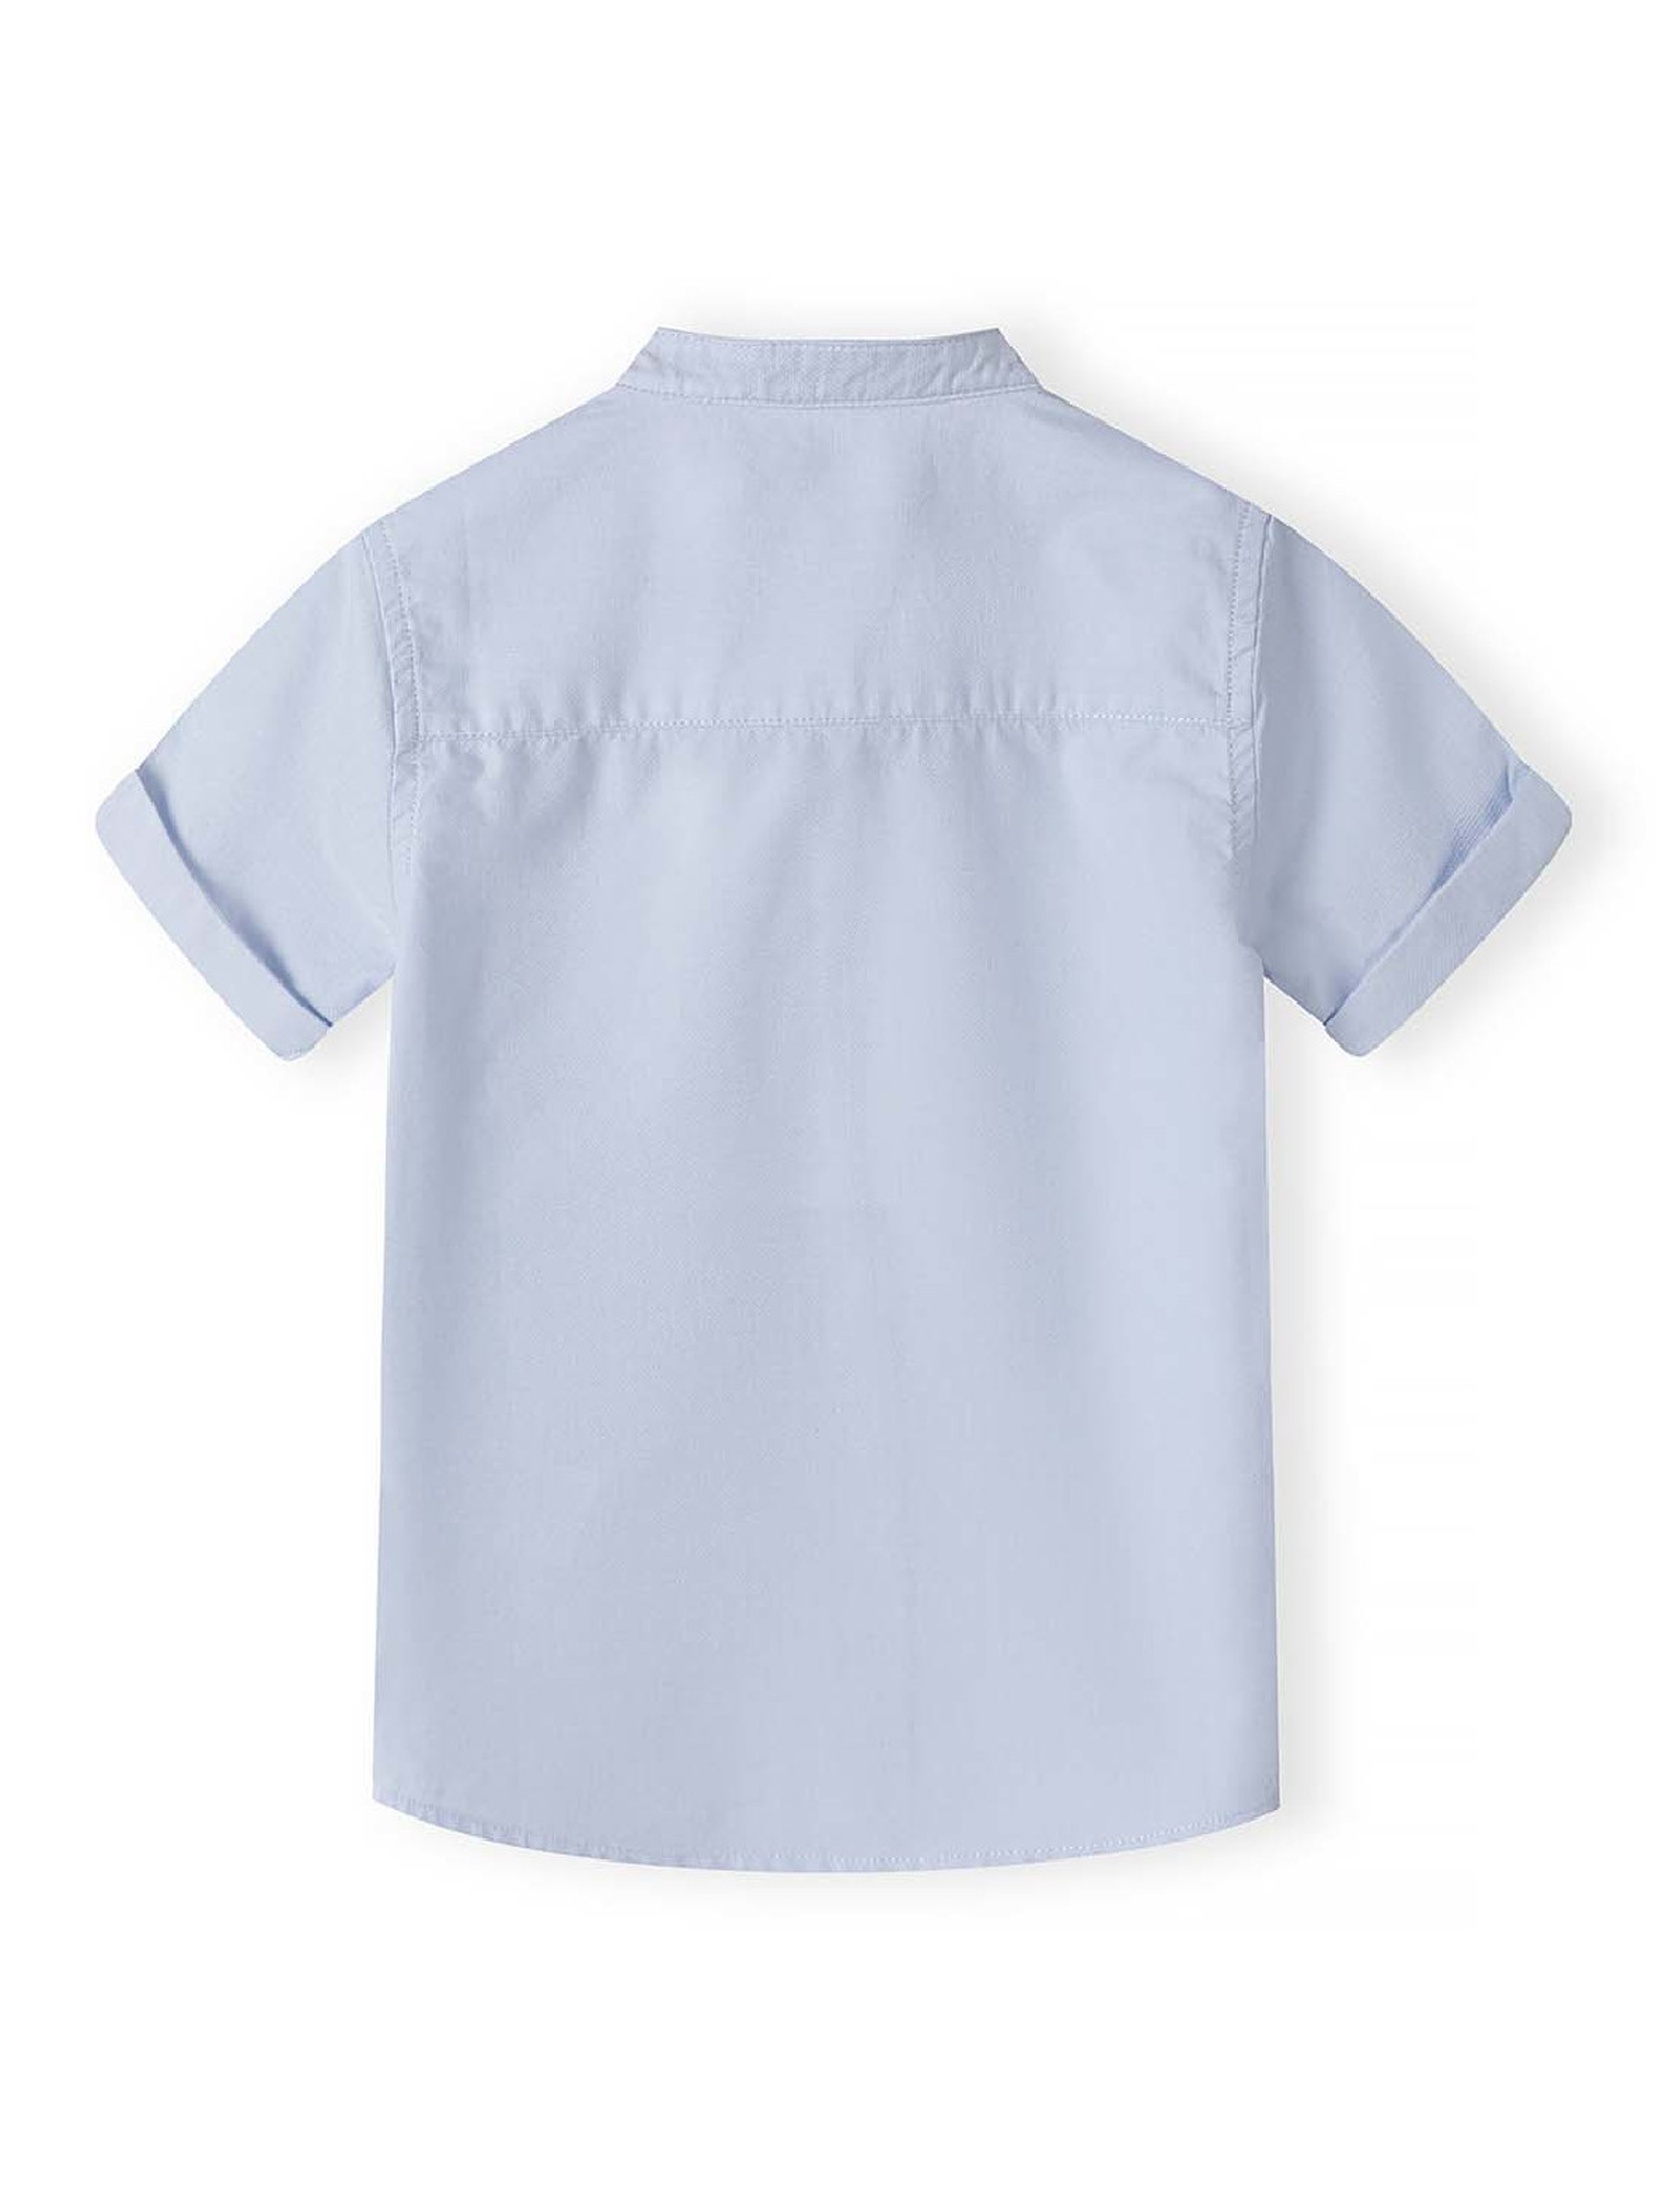 Koszula ze stójką i krótkim rękawem chłopięca- błękitna